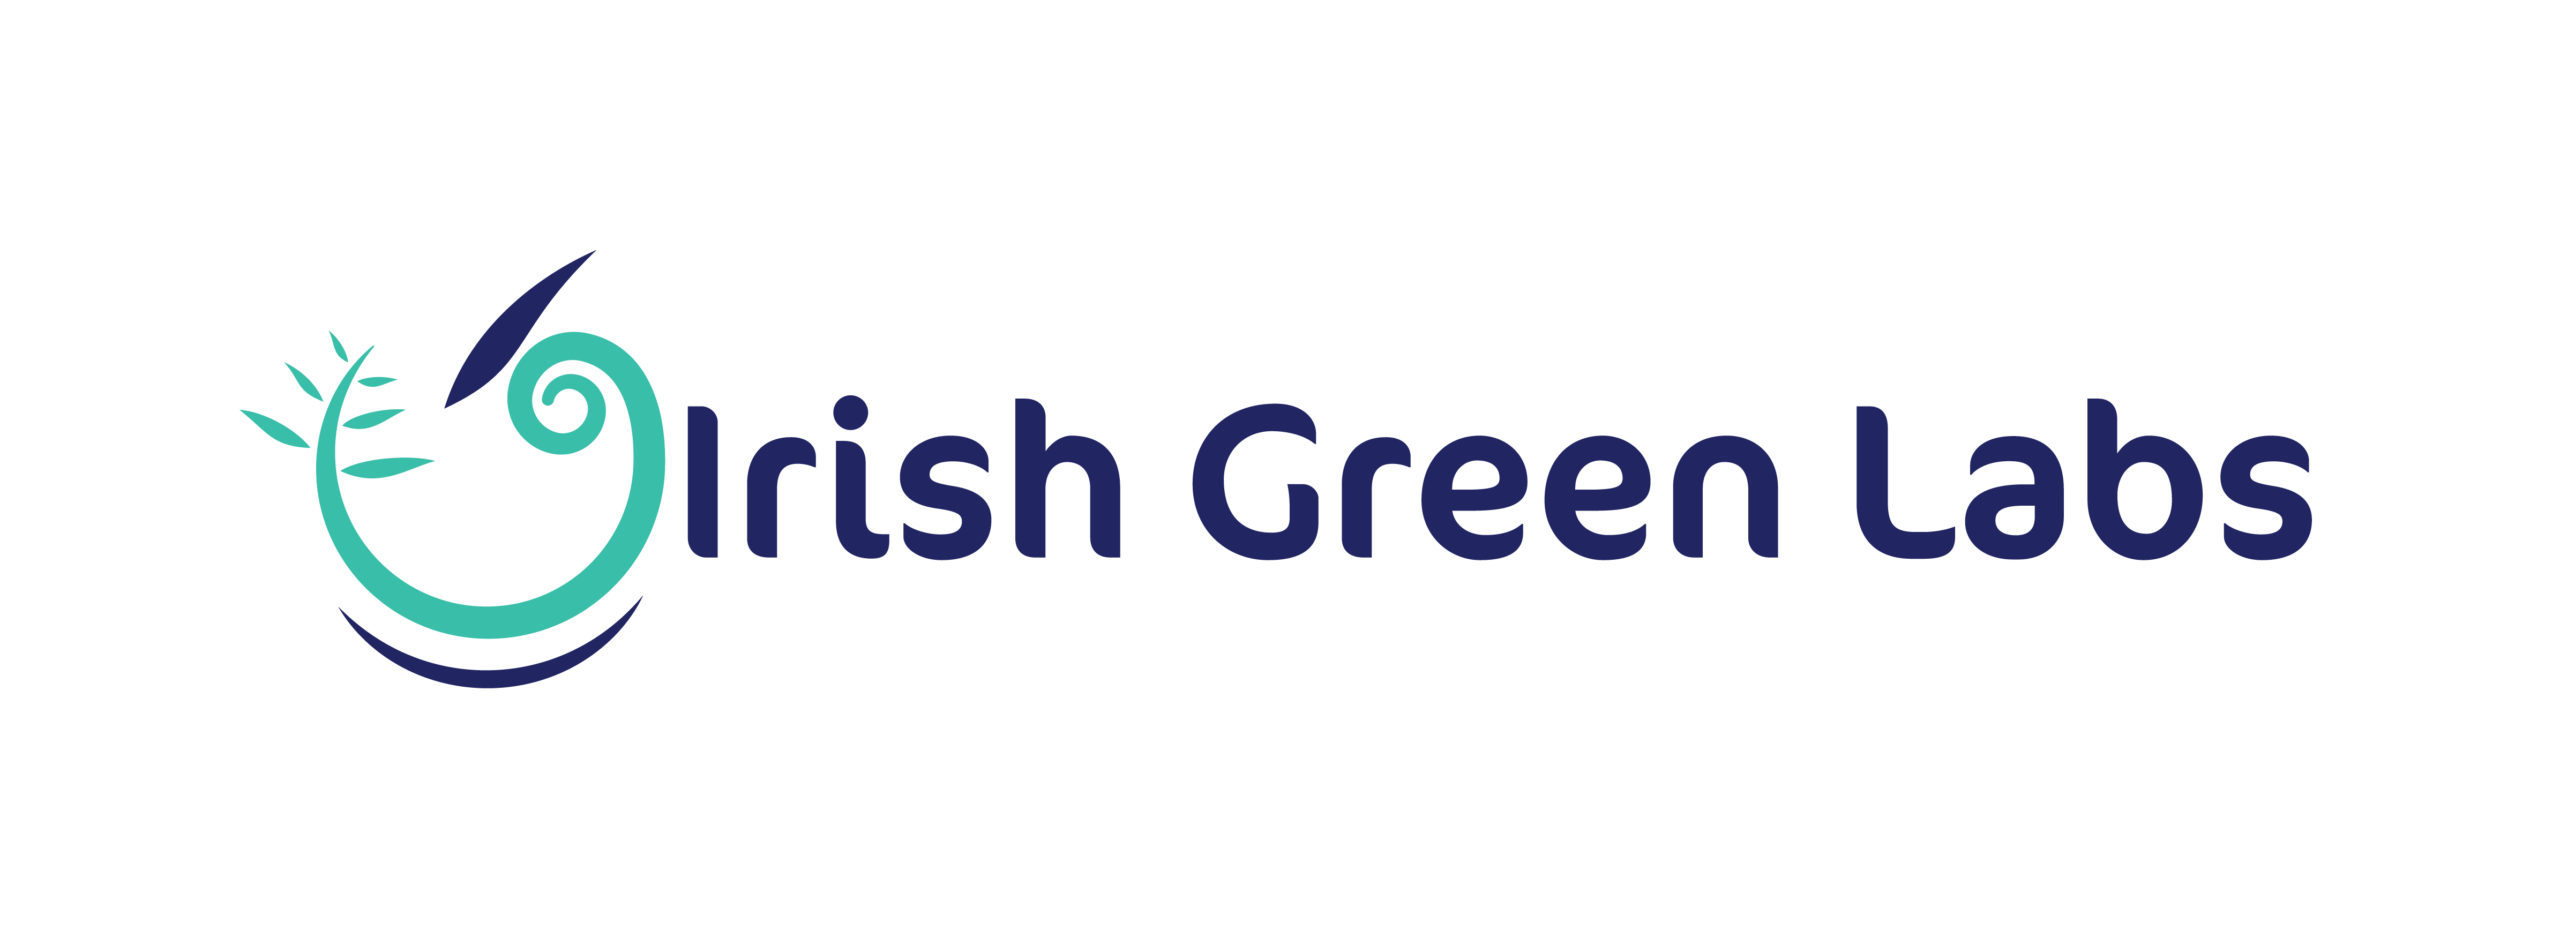 Irish_green_labs